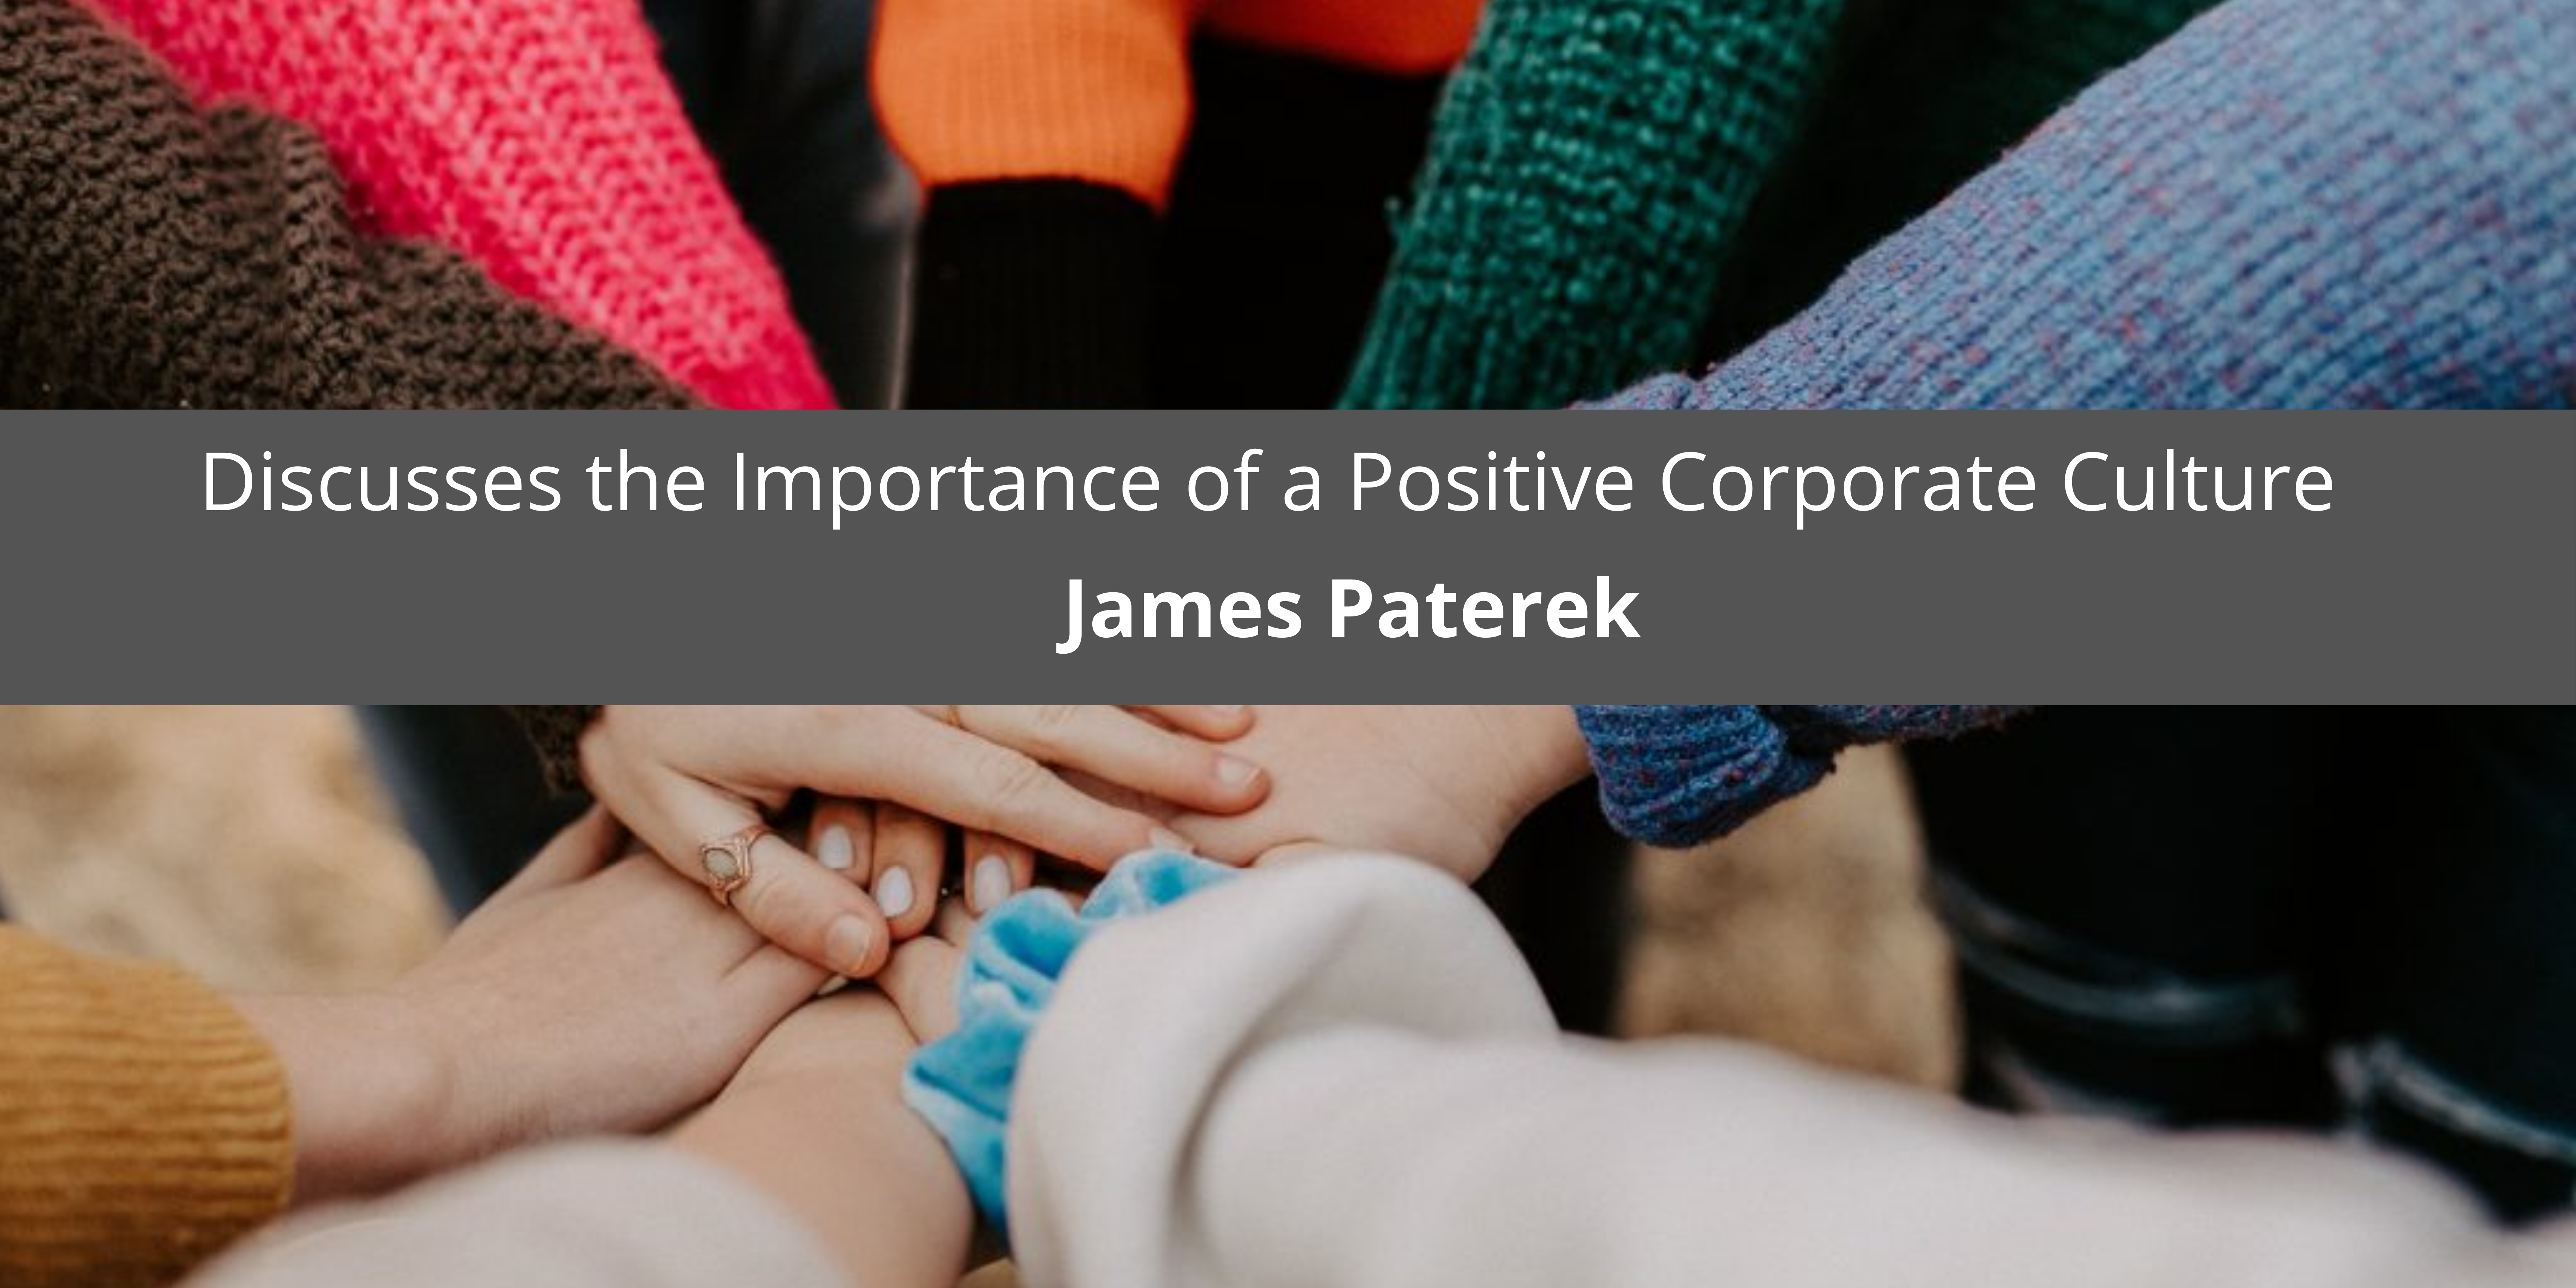 James Paterek Discusses the Importance of a Positive Corporate Culture